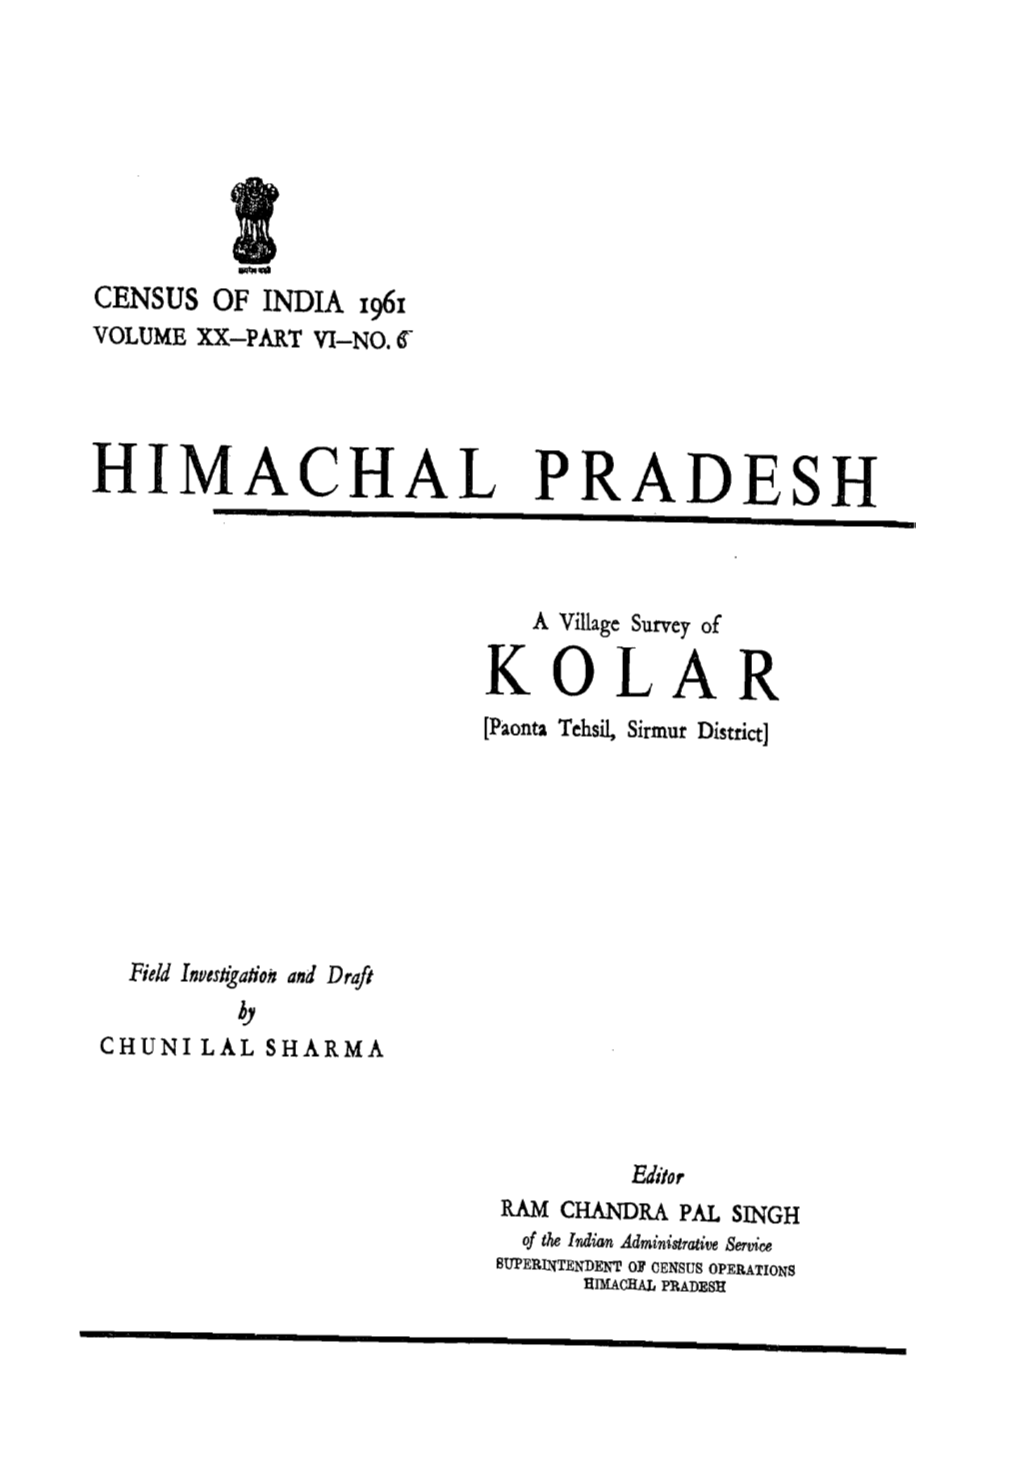 Kolar , Village Survey Of, Part-VI-No-6, Vol-XX, Himachal Pradesh